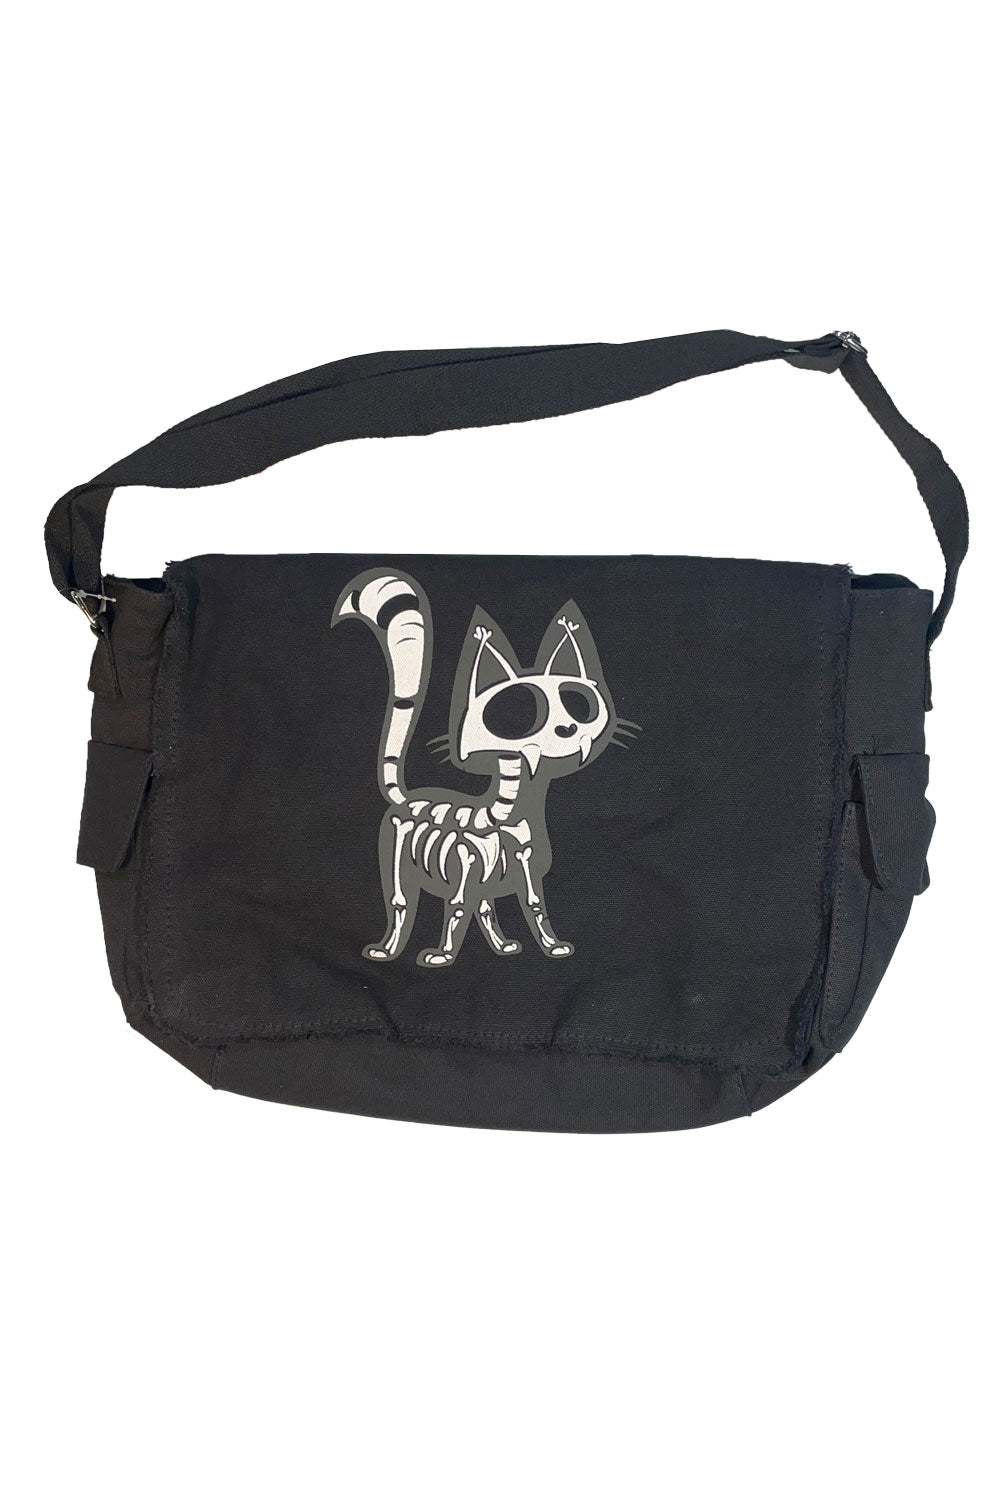 gothic cat messenger bag